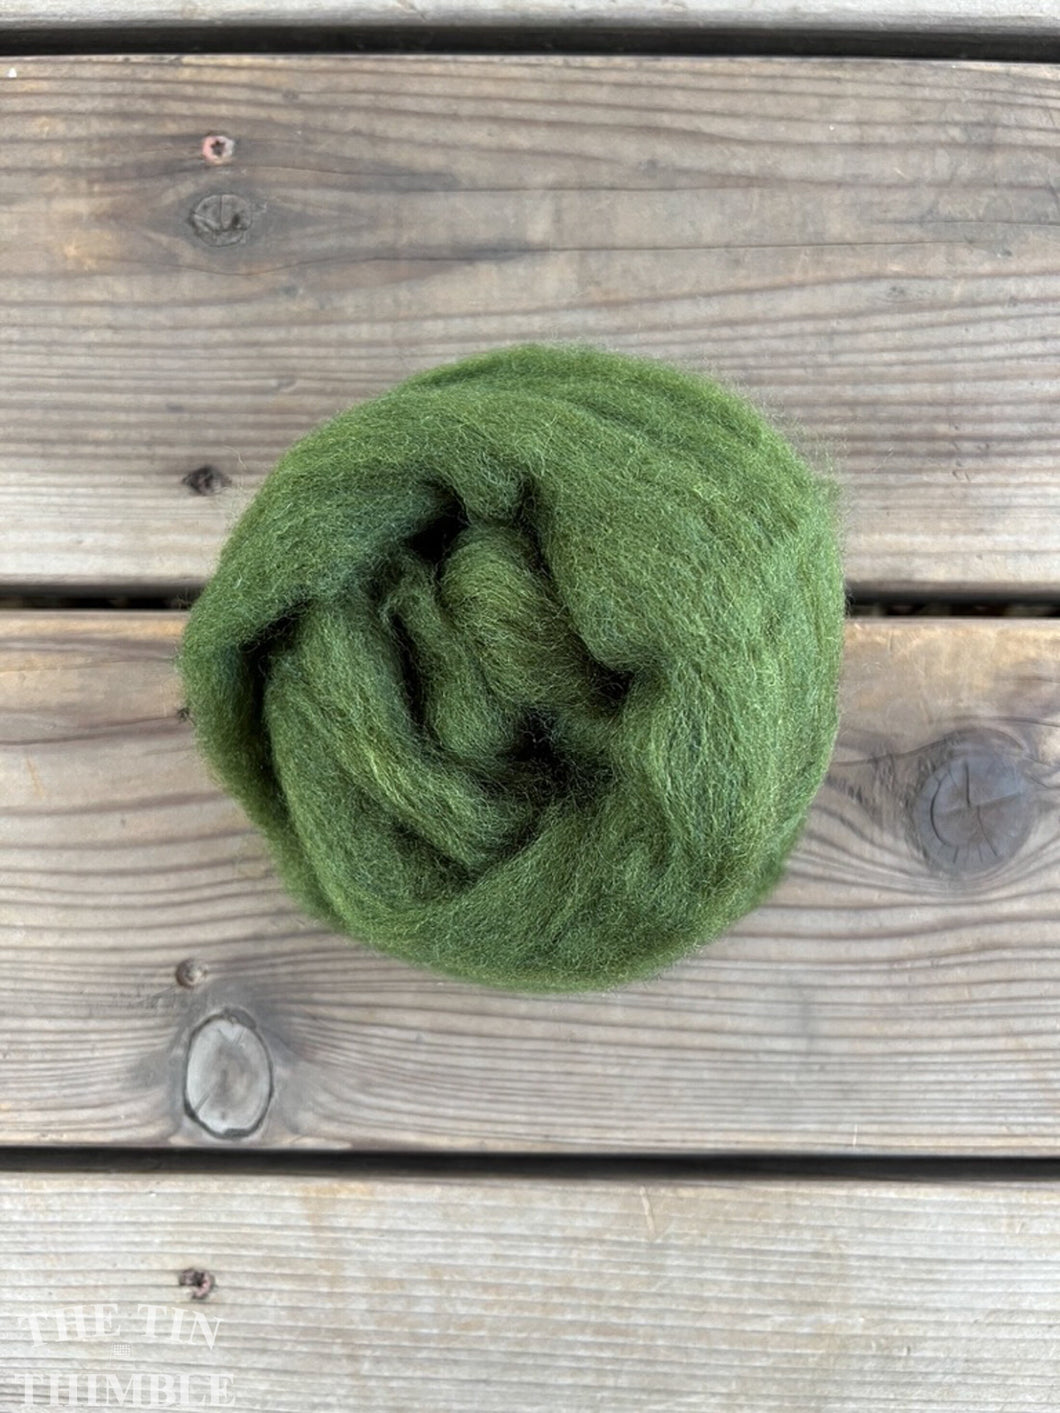 Fern Green CORRIEDALE Wool Roving - 1 oz - Nuno Felting / Wet Felting / Felting Supplies / Hand Felting / Needle Felting / Fiber Art